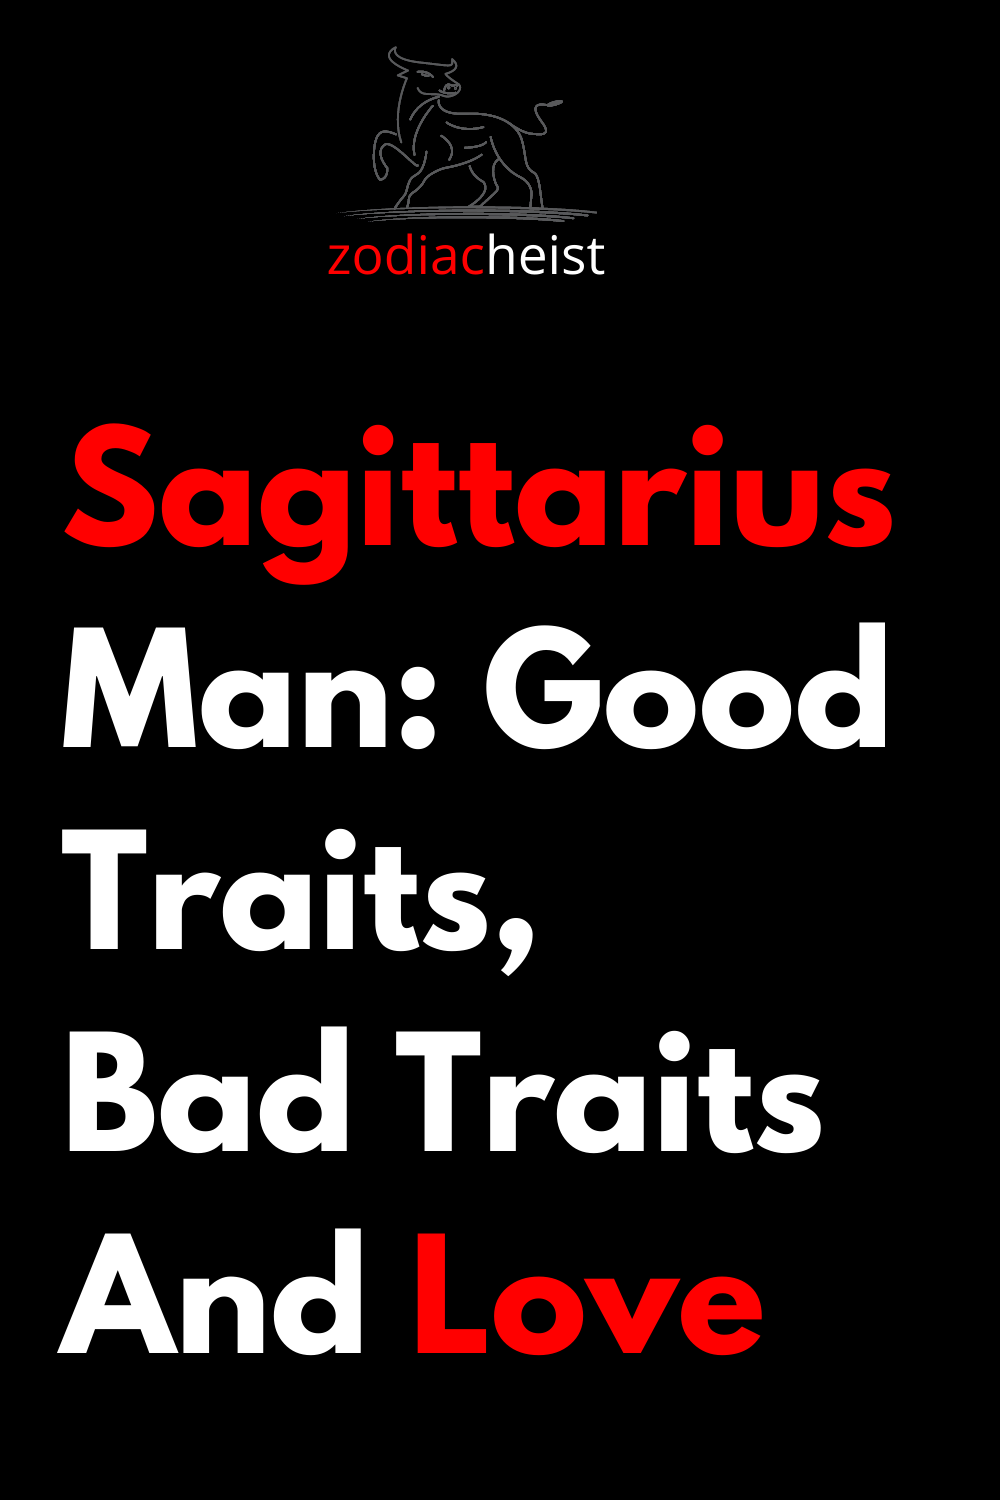 Sagittarius Man: Good Traits, Bad Traits And Love